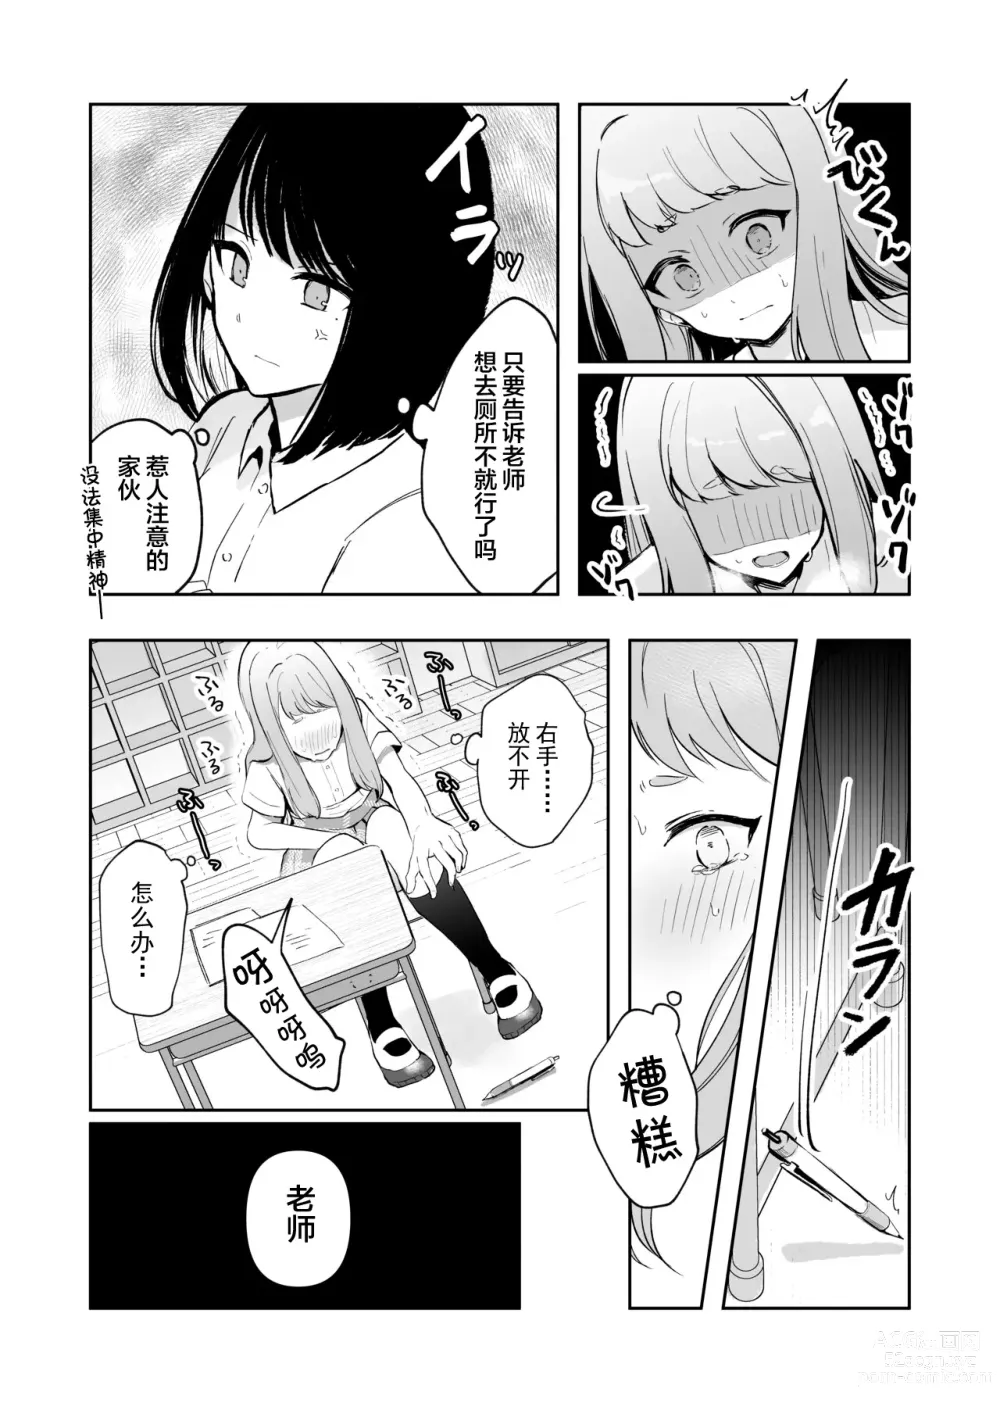 Page 9 of doujinshi 还可以忍耐的吧?